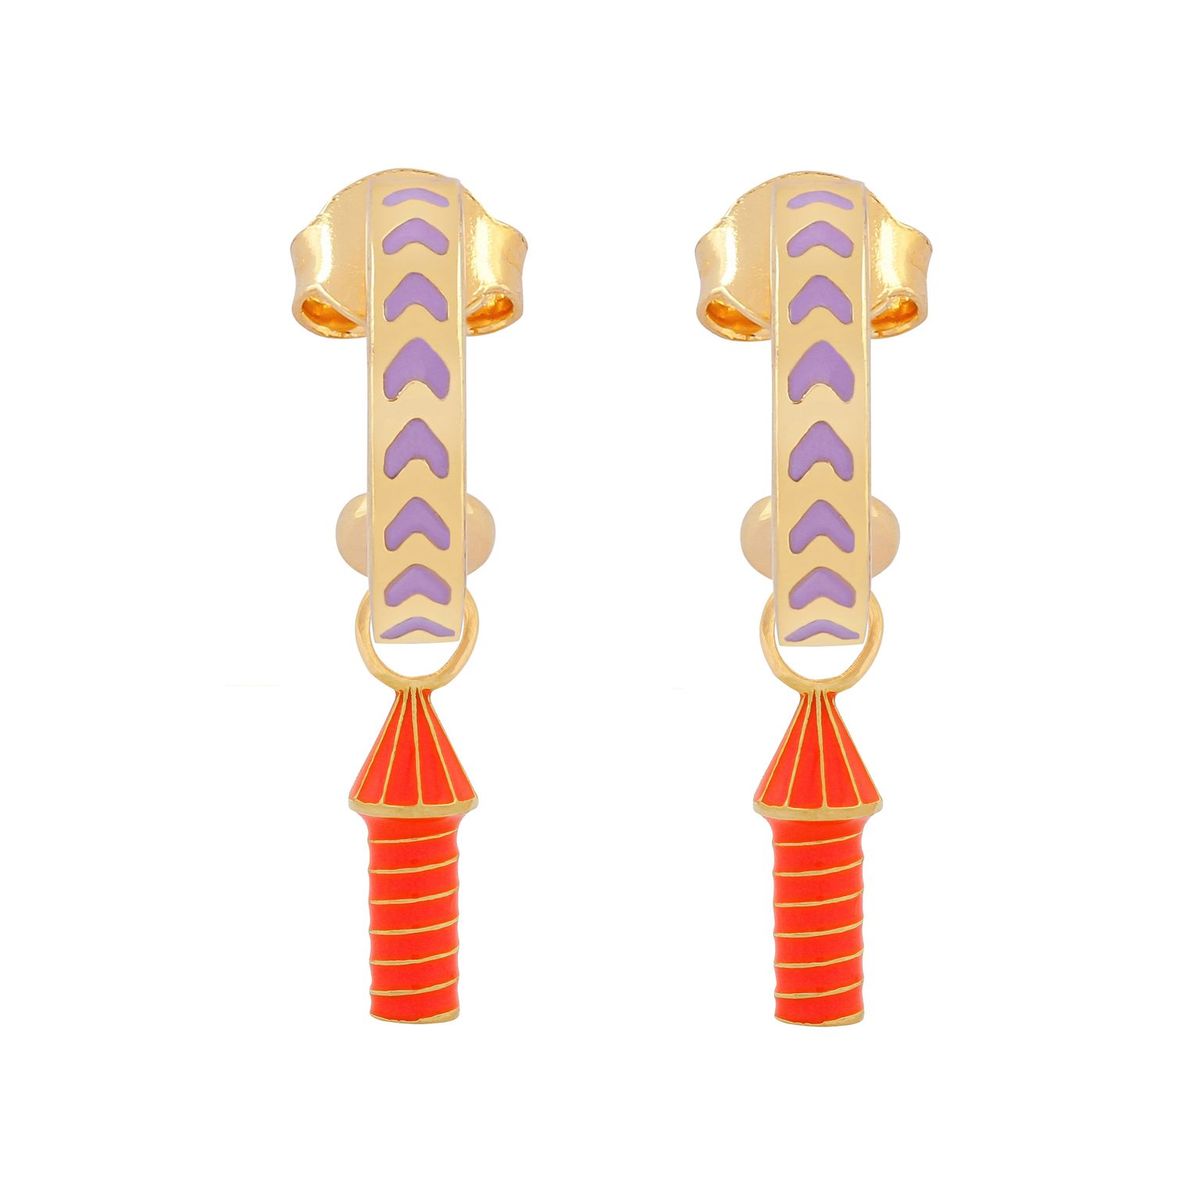 image of rocket enamel earrings in purple, orange and gold on white background